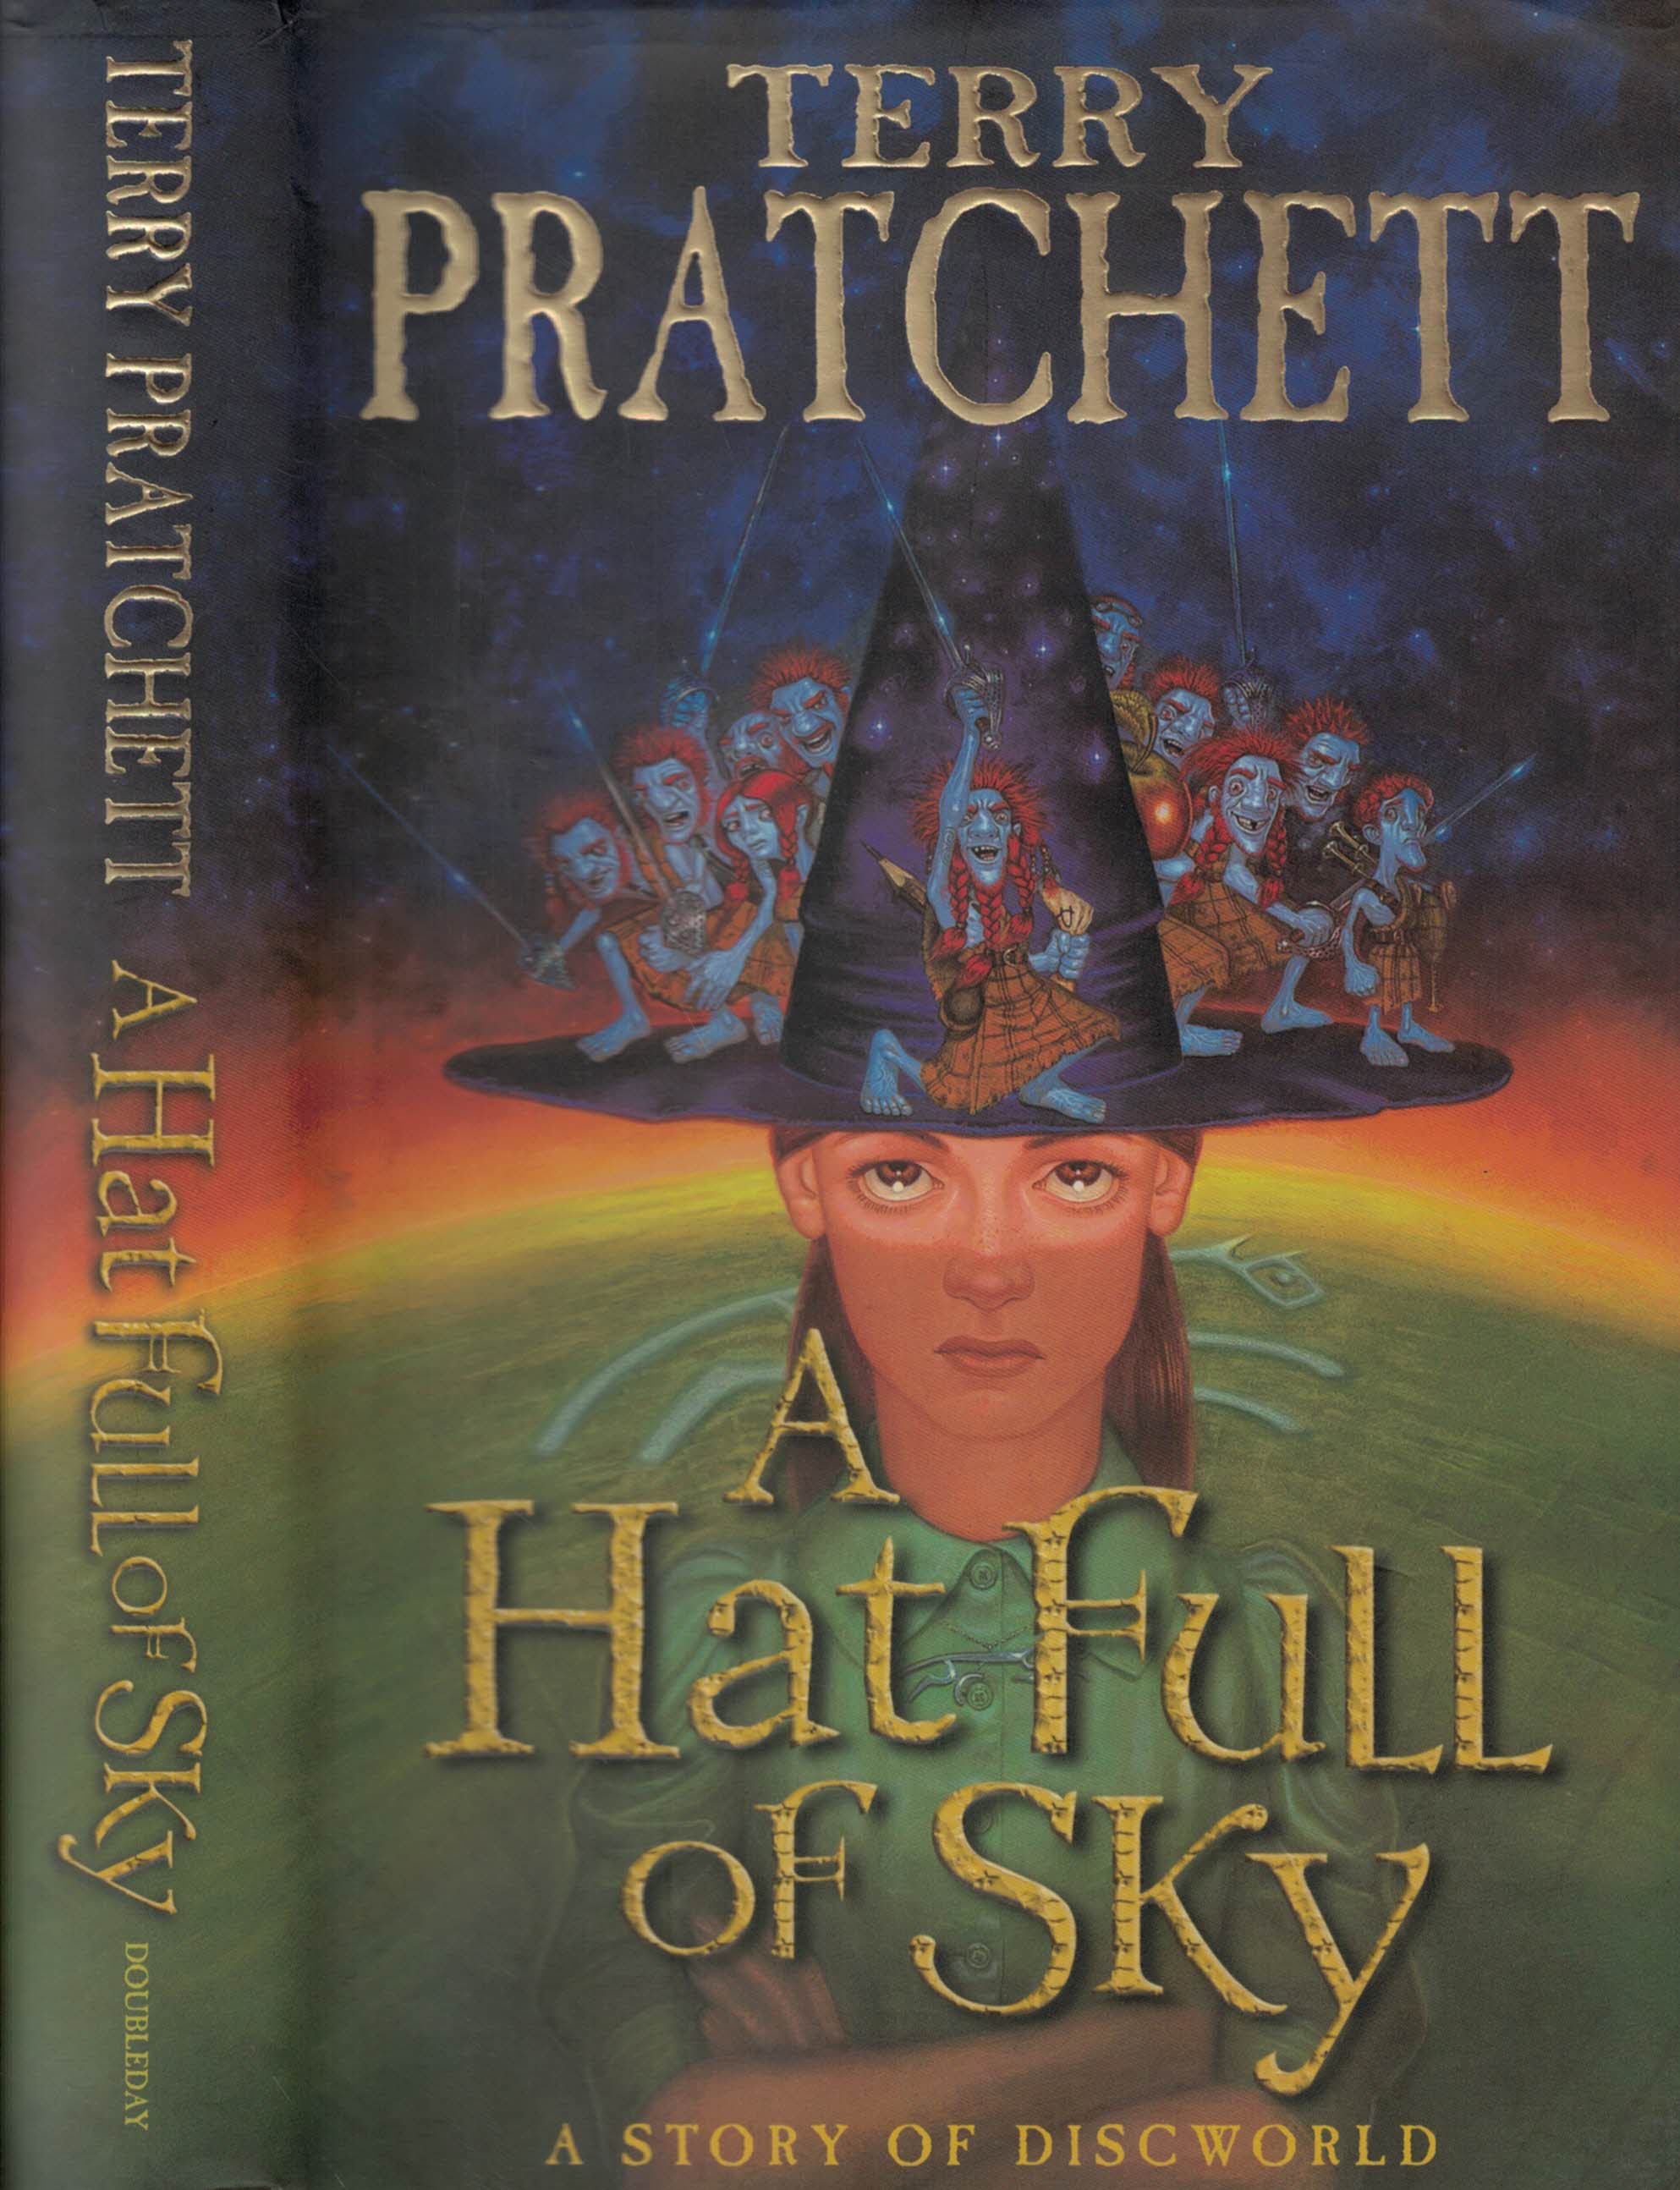 A Hat Full of Sky [Discworld]